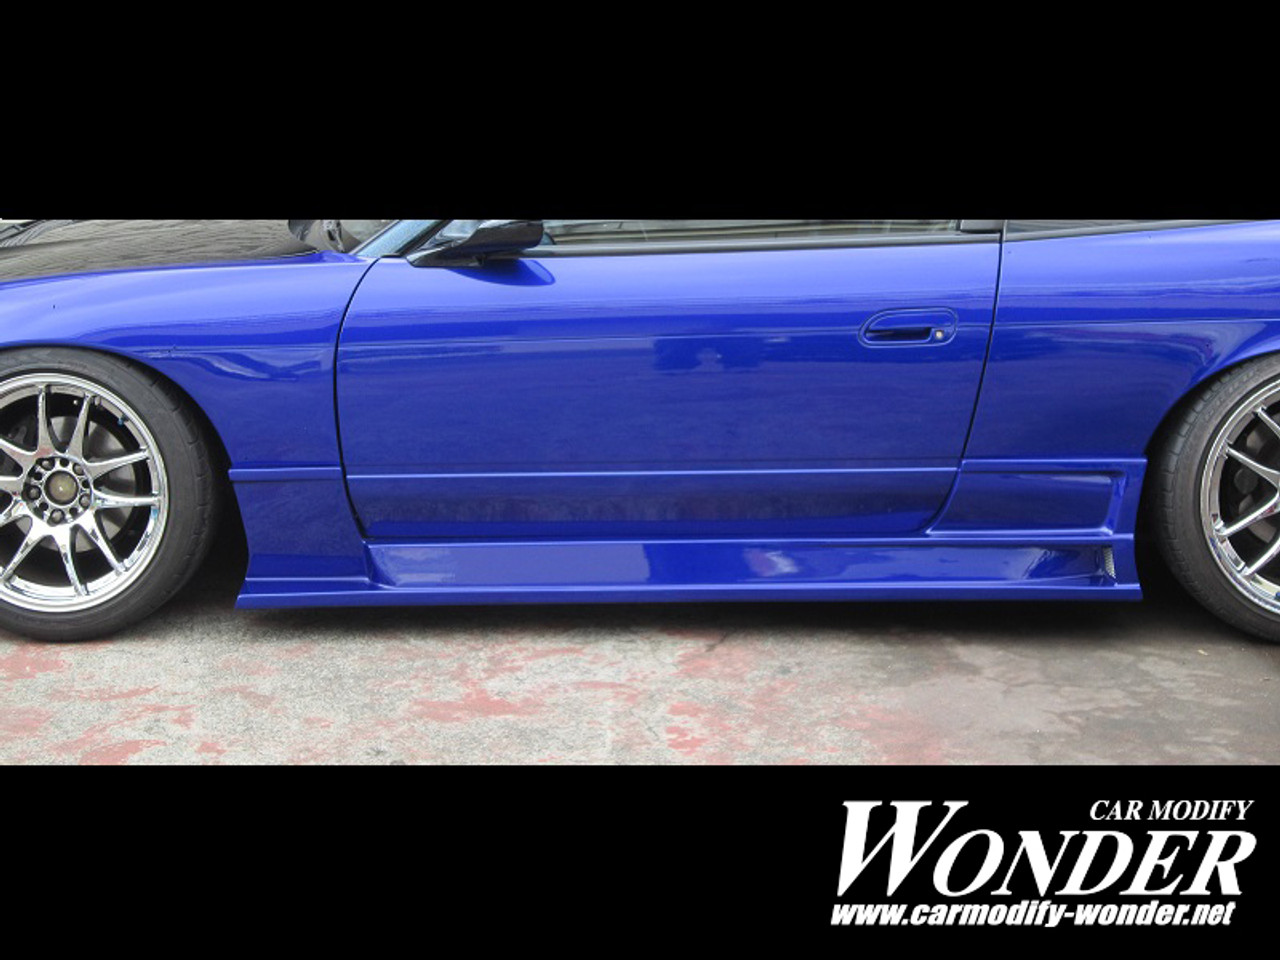 Car Modify Wonder Glare Side Skirts for Silvia (89-95 S13